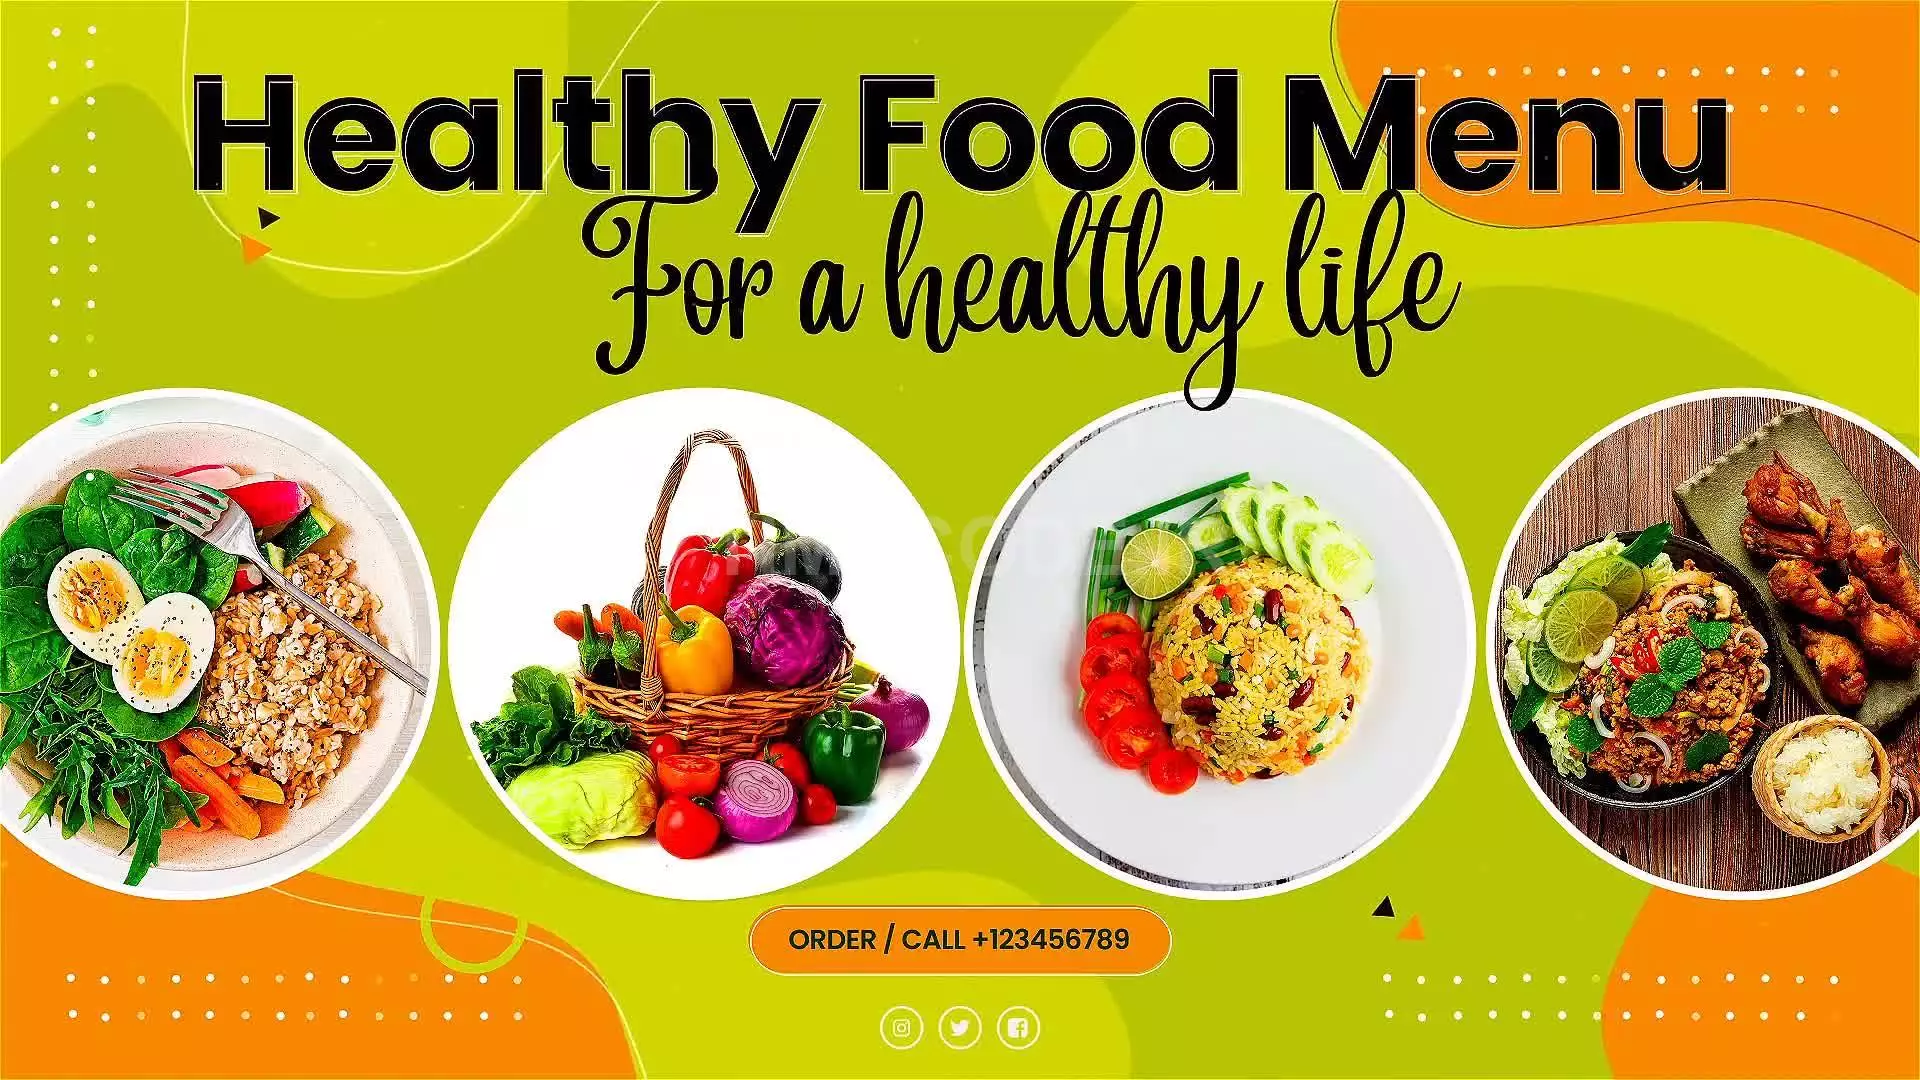 Health Food | Restaurant Promotional